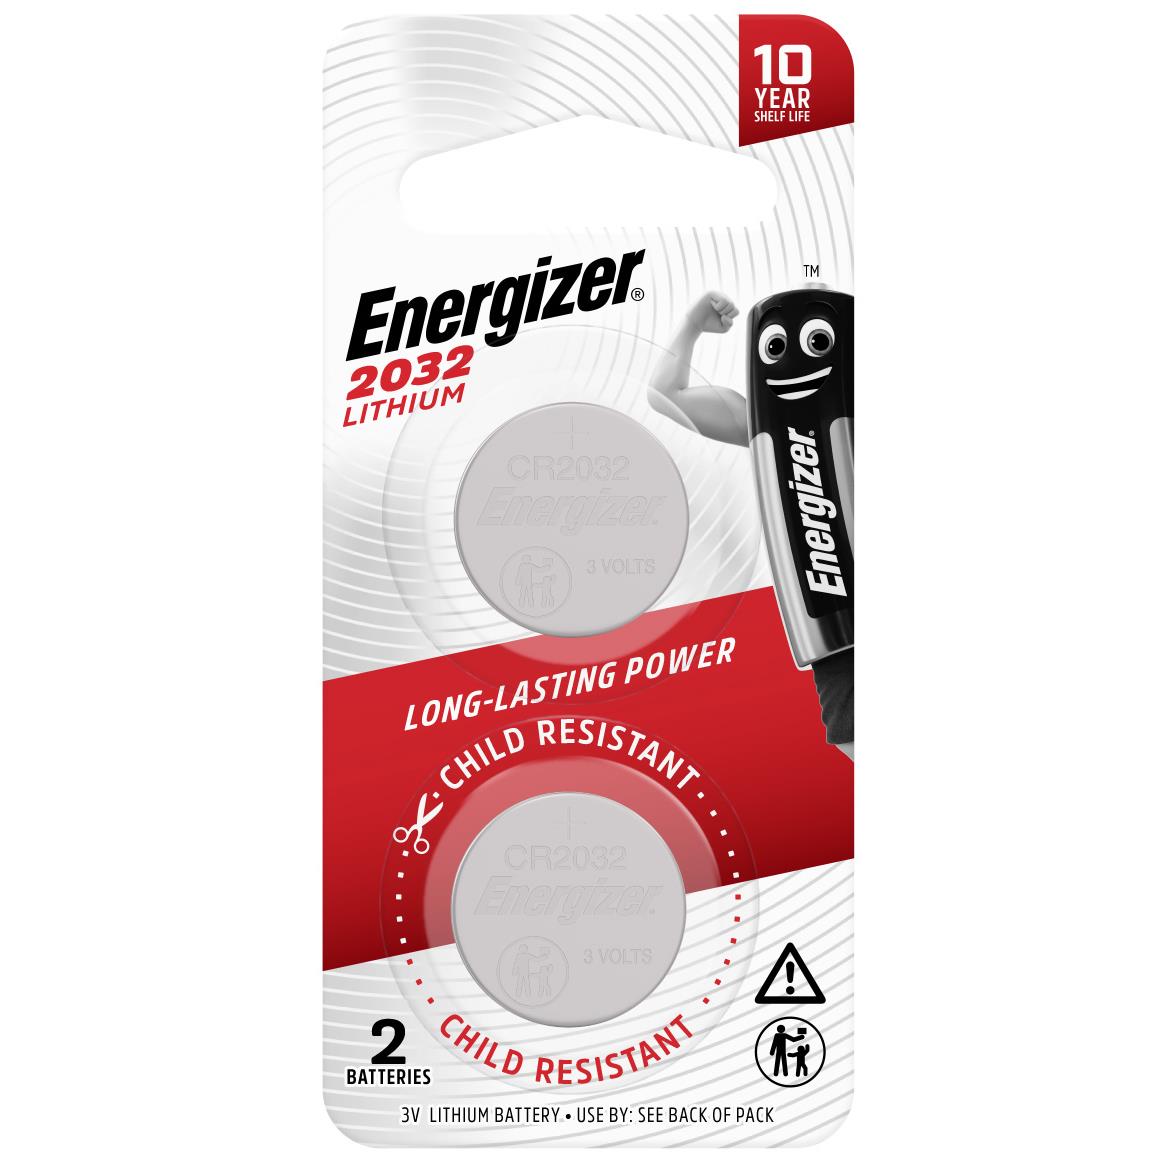 energizer lithium 2032 coin battery (2pk)